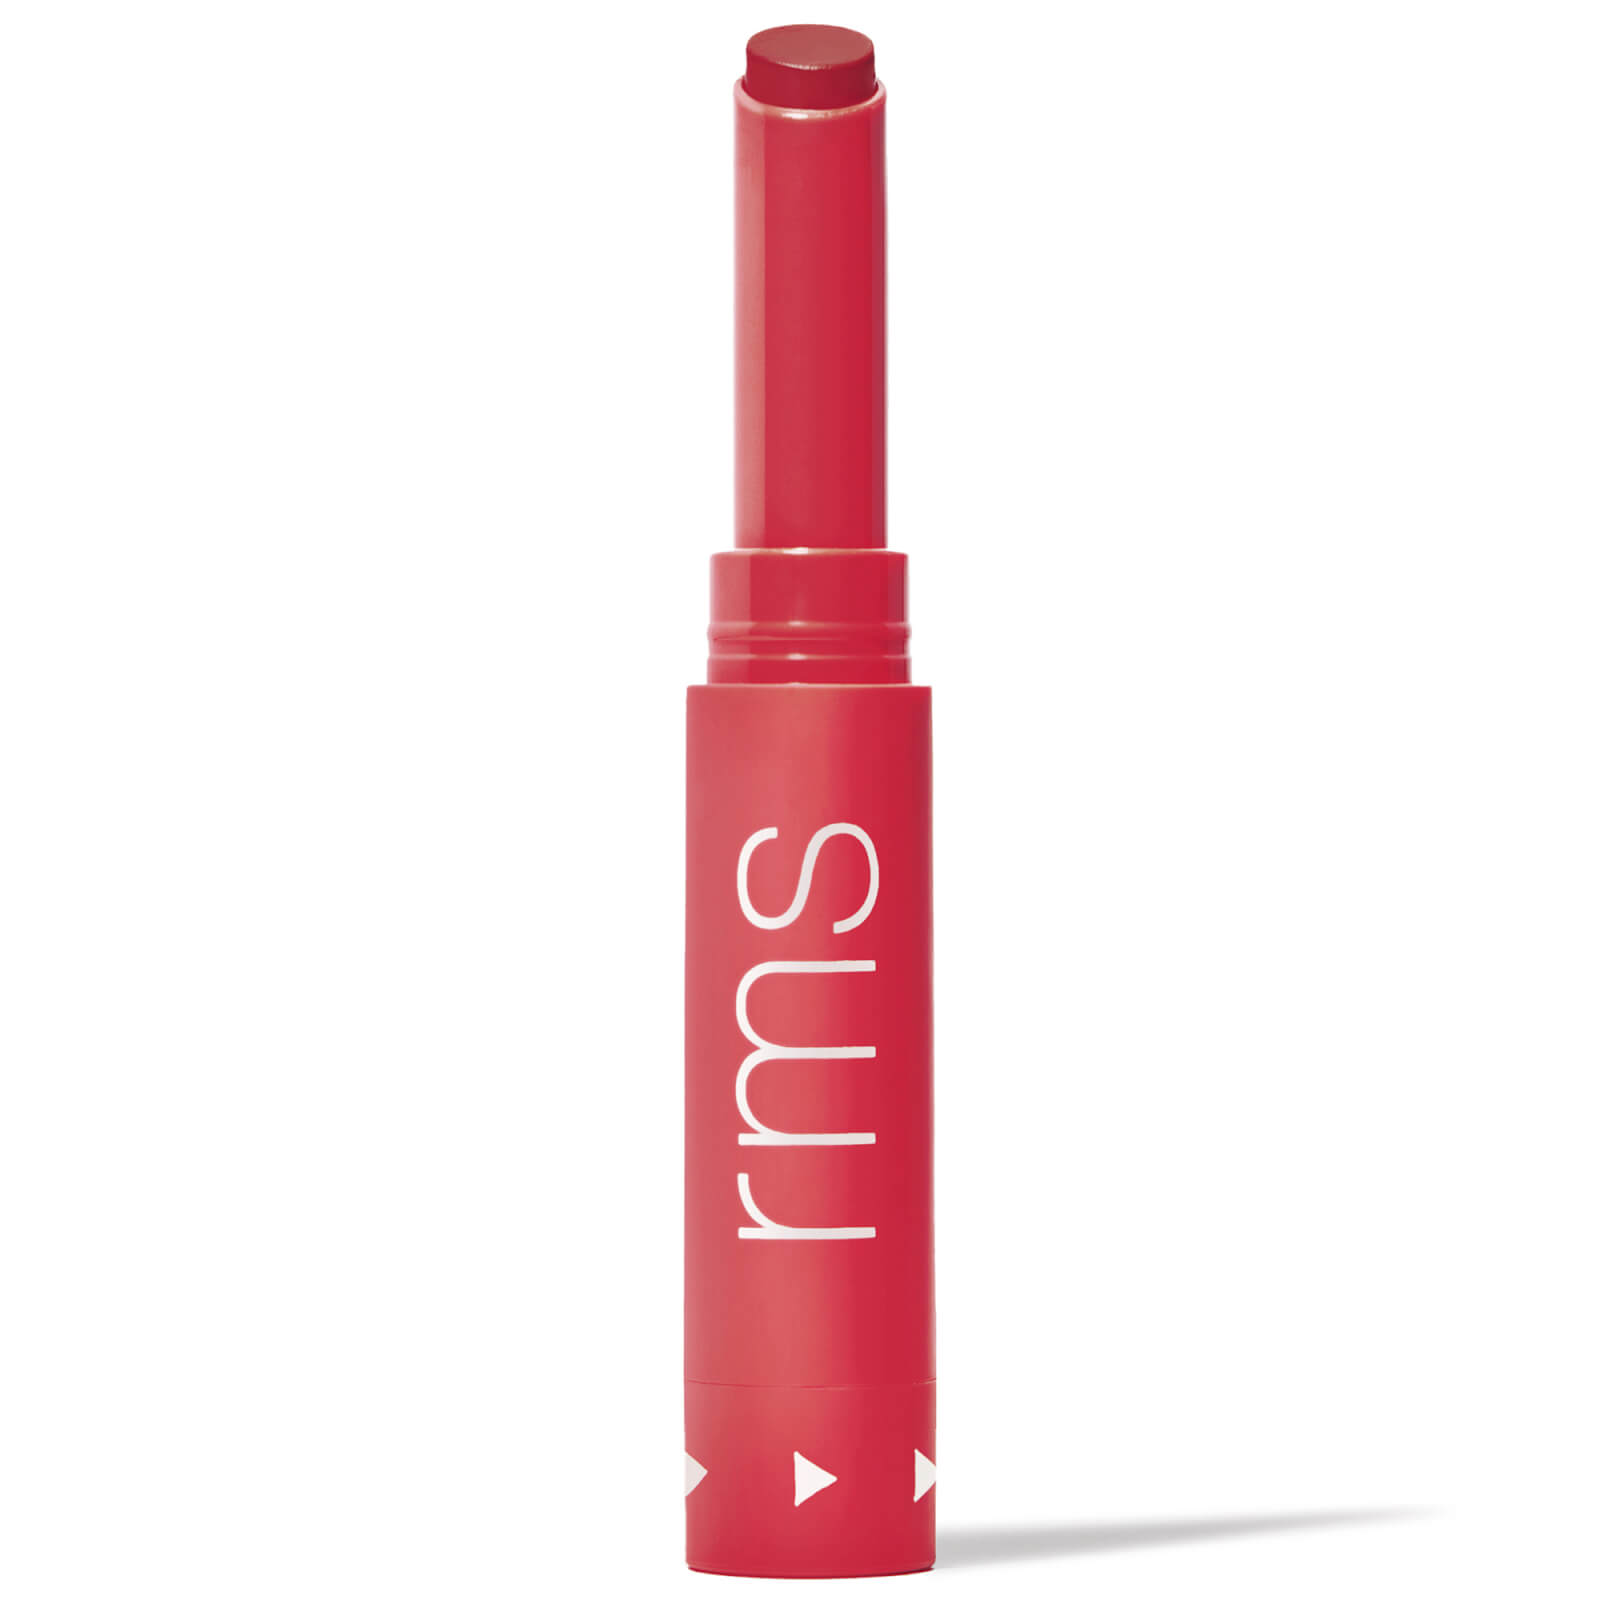 Rms Beauty Legendary Serum Lipstick 17g (various Shades) - Monica In Pink